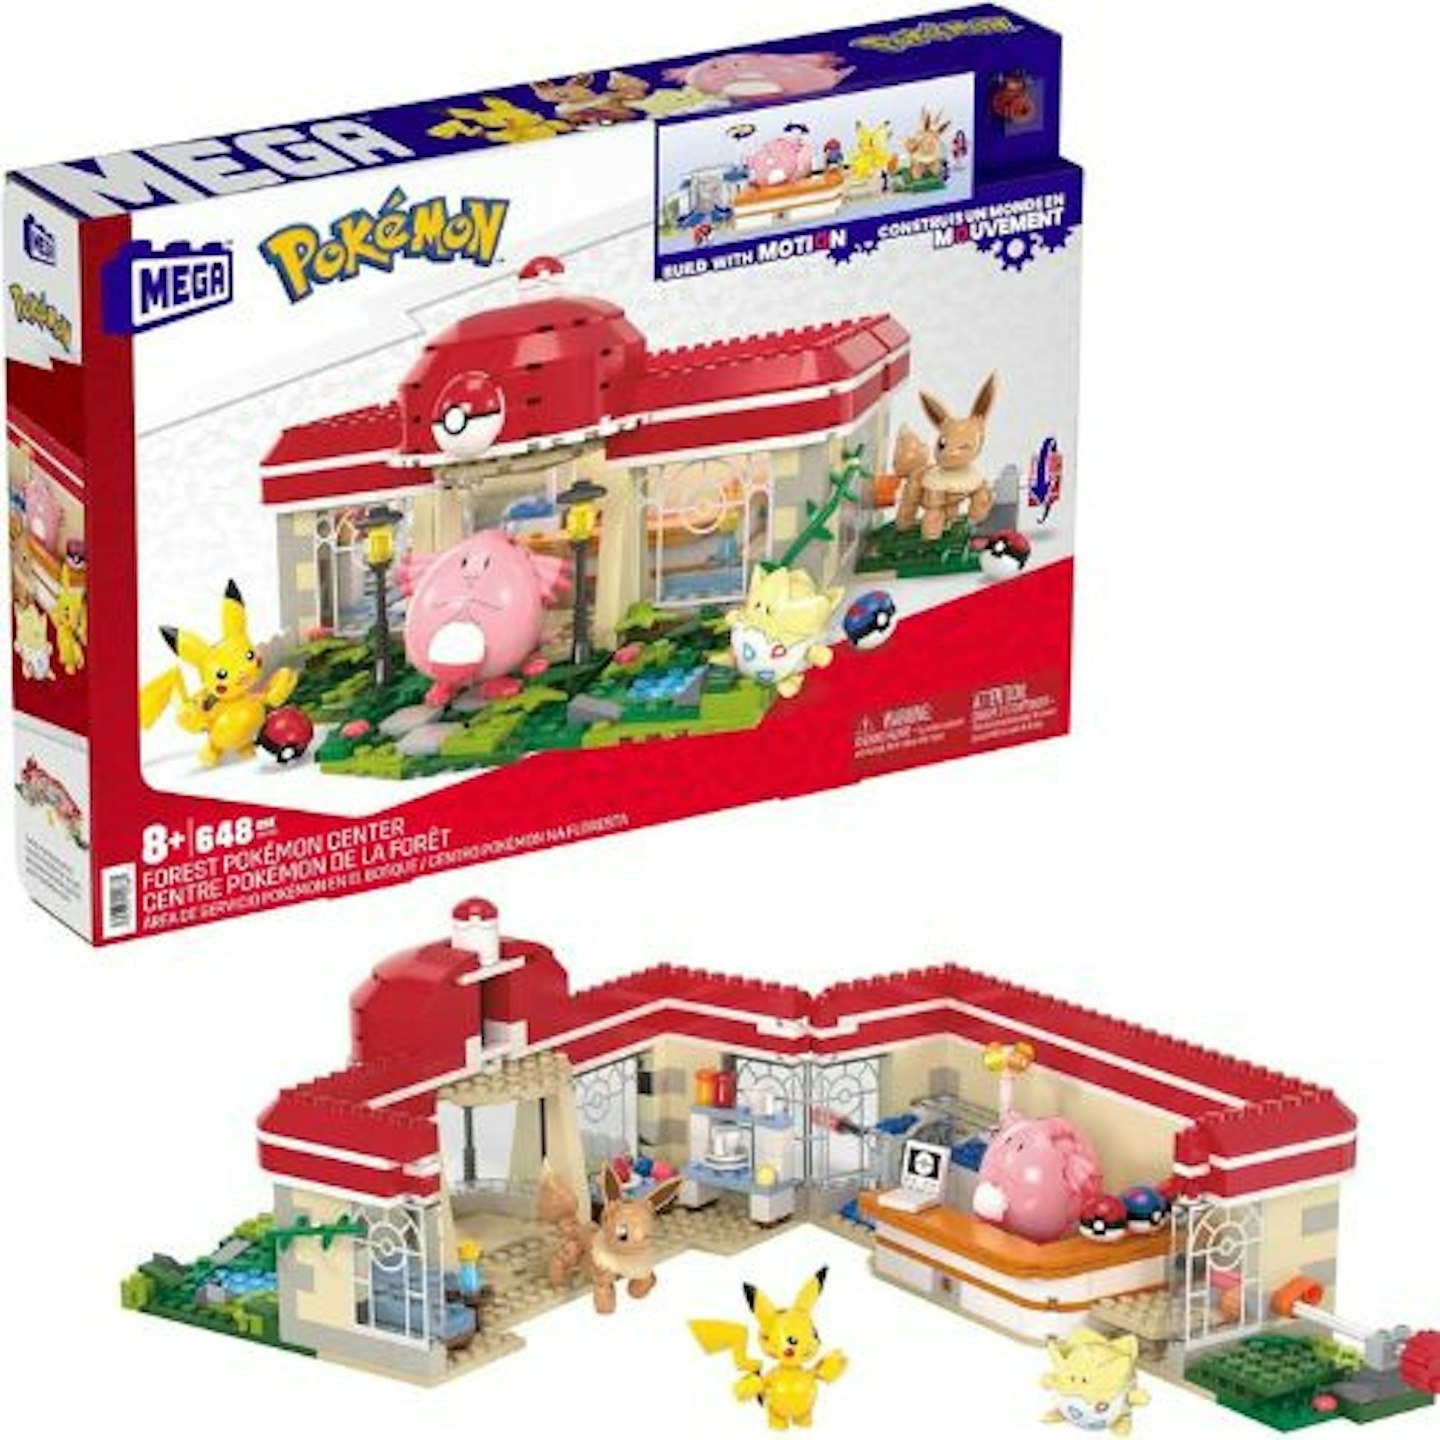 Best Pokémon toys MEGA Pokémon Playset Forest Pokémon Centre